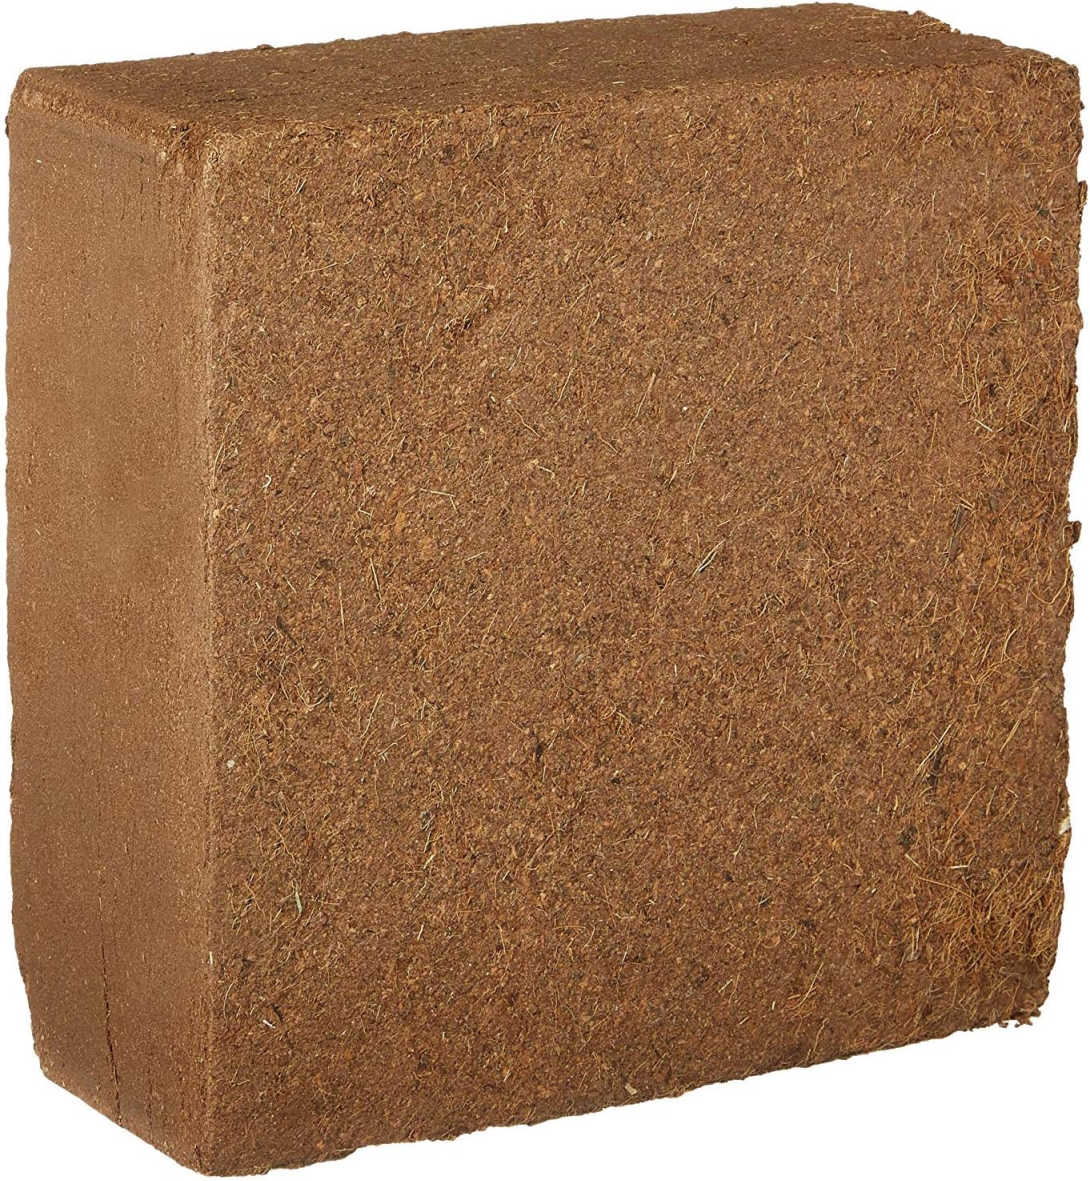 XL Coconut Coir Brick